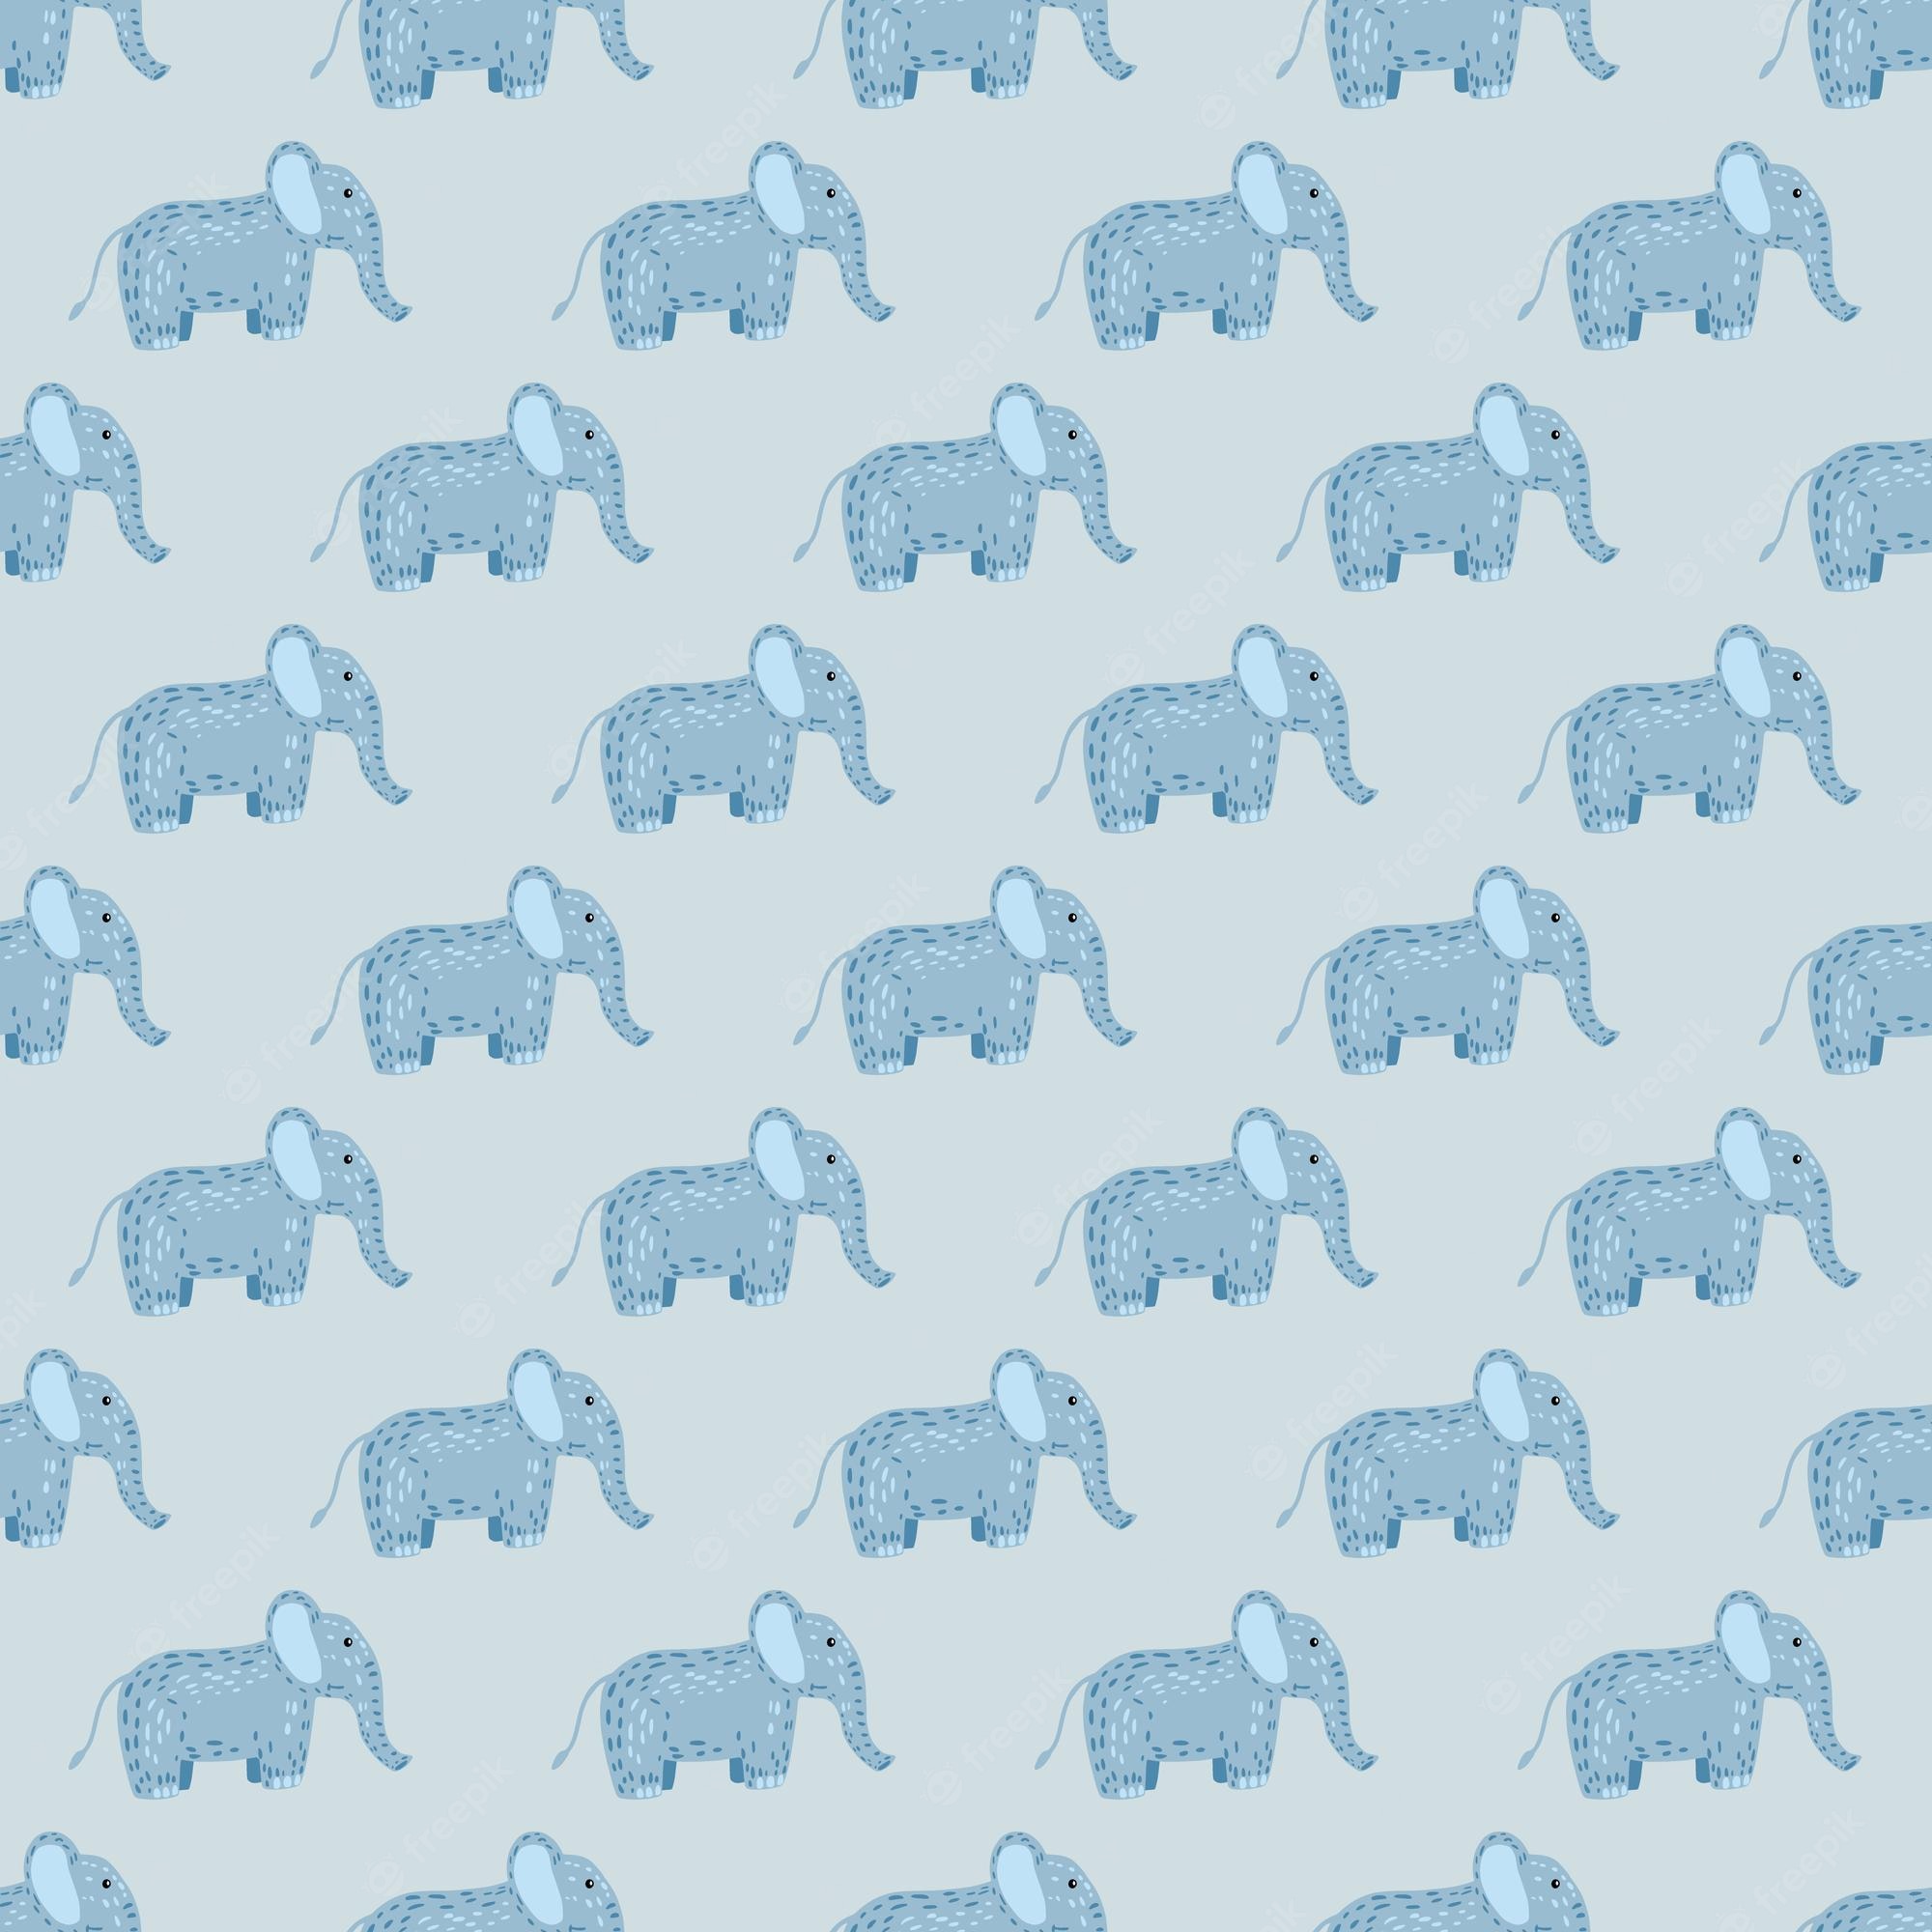 A pattern of elephants on blue background - Elephant